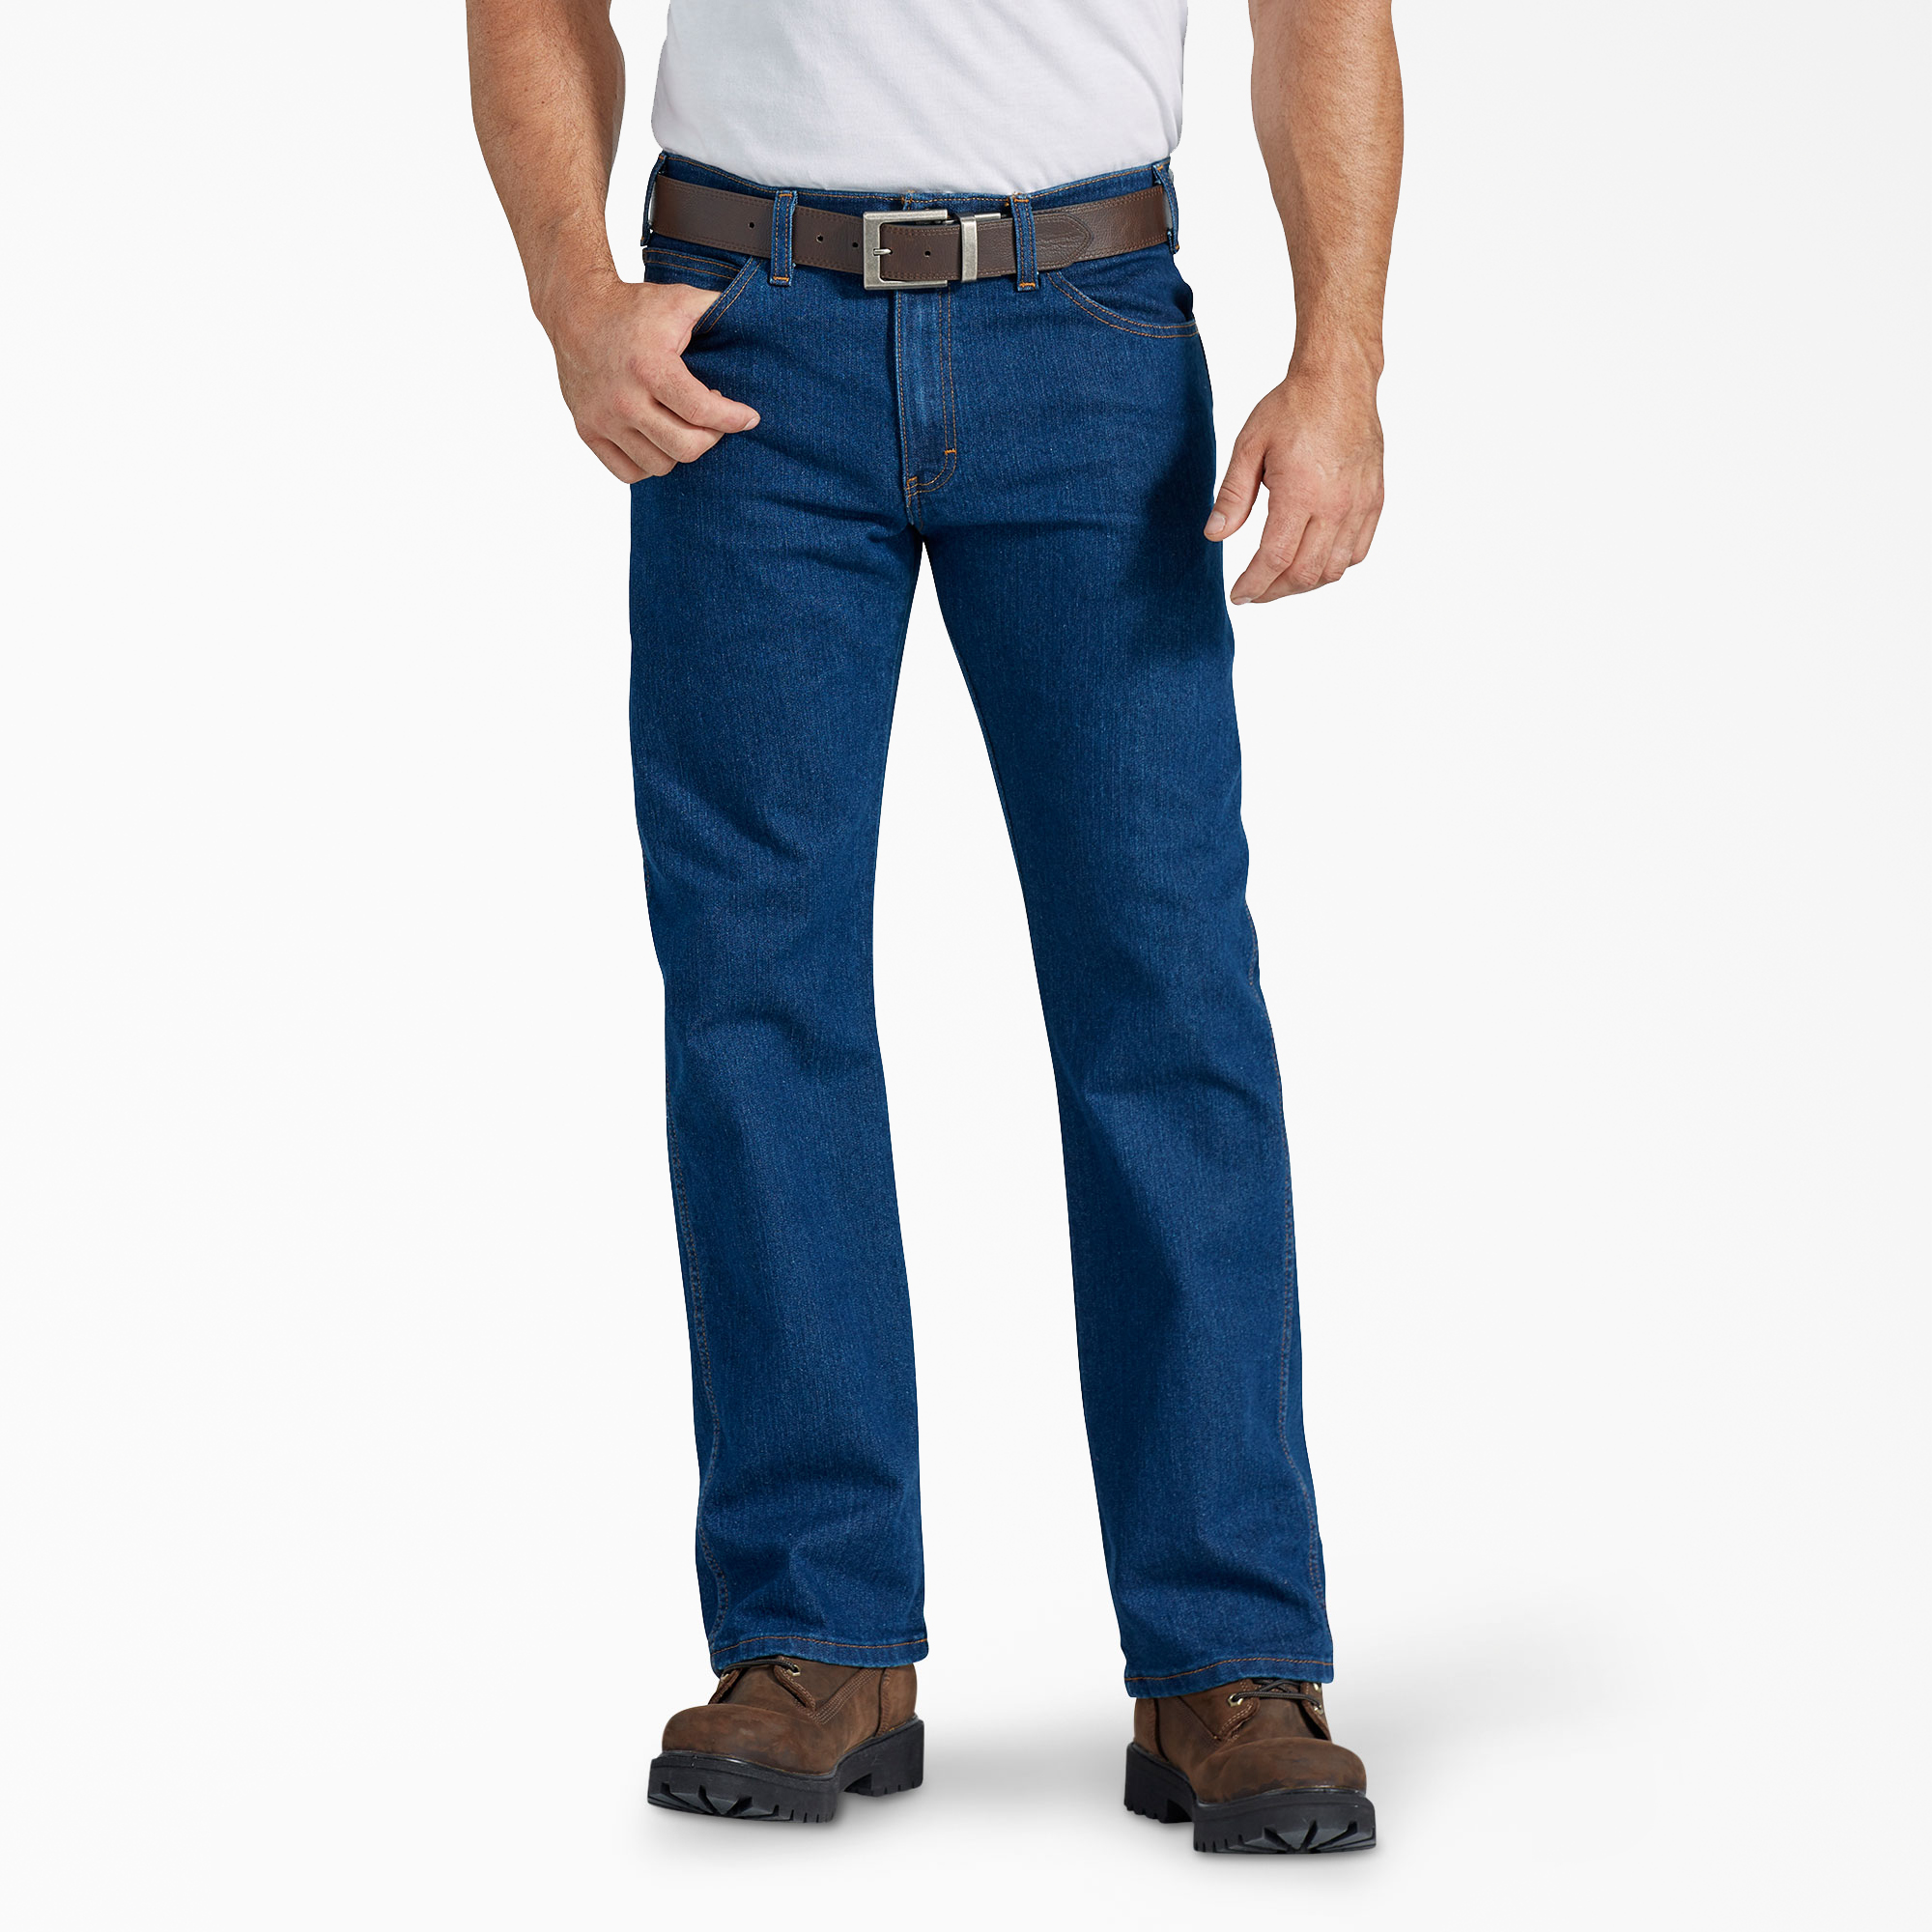 FLEX Active Waist 5-Pocket Regular Fit Jeans - Rinsed Indigo Blue (RNB)